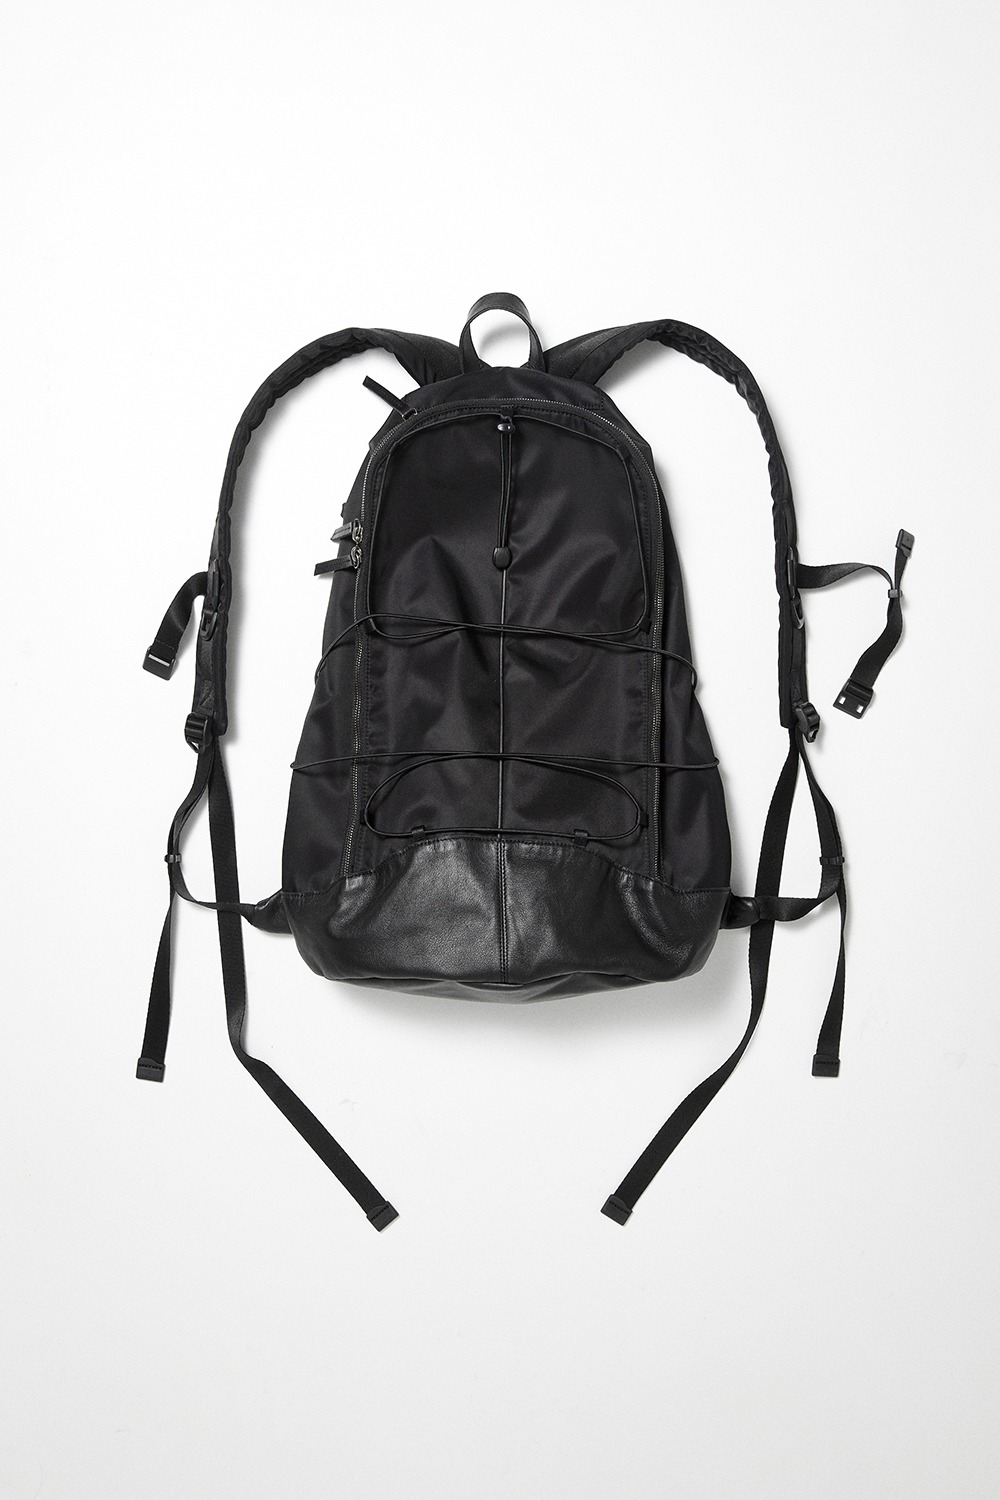 Nylon Leather Backpack Black